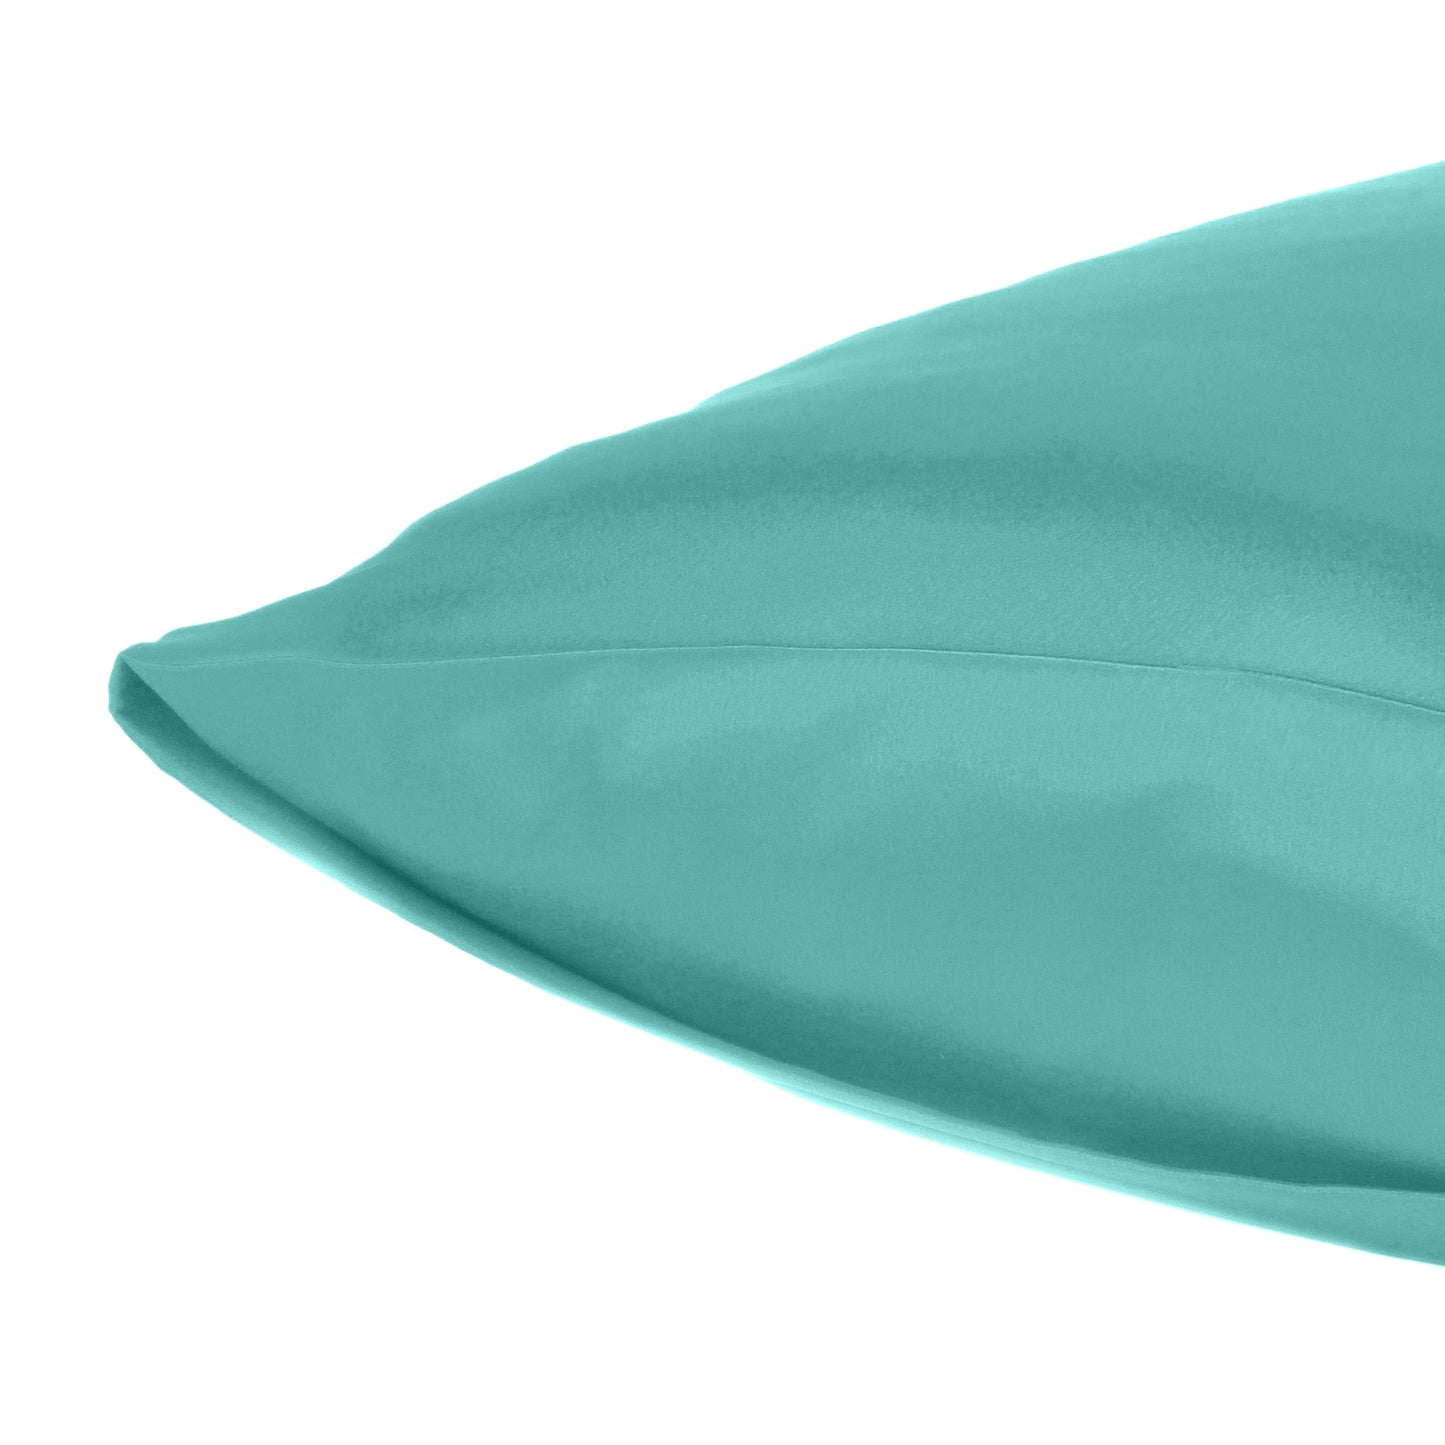 Luxury Soft Plain Satin Silk Pillowcases in Set of 2 - Teal